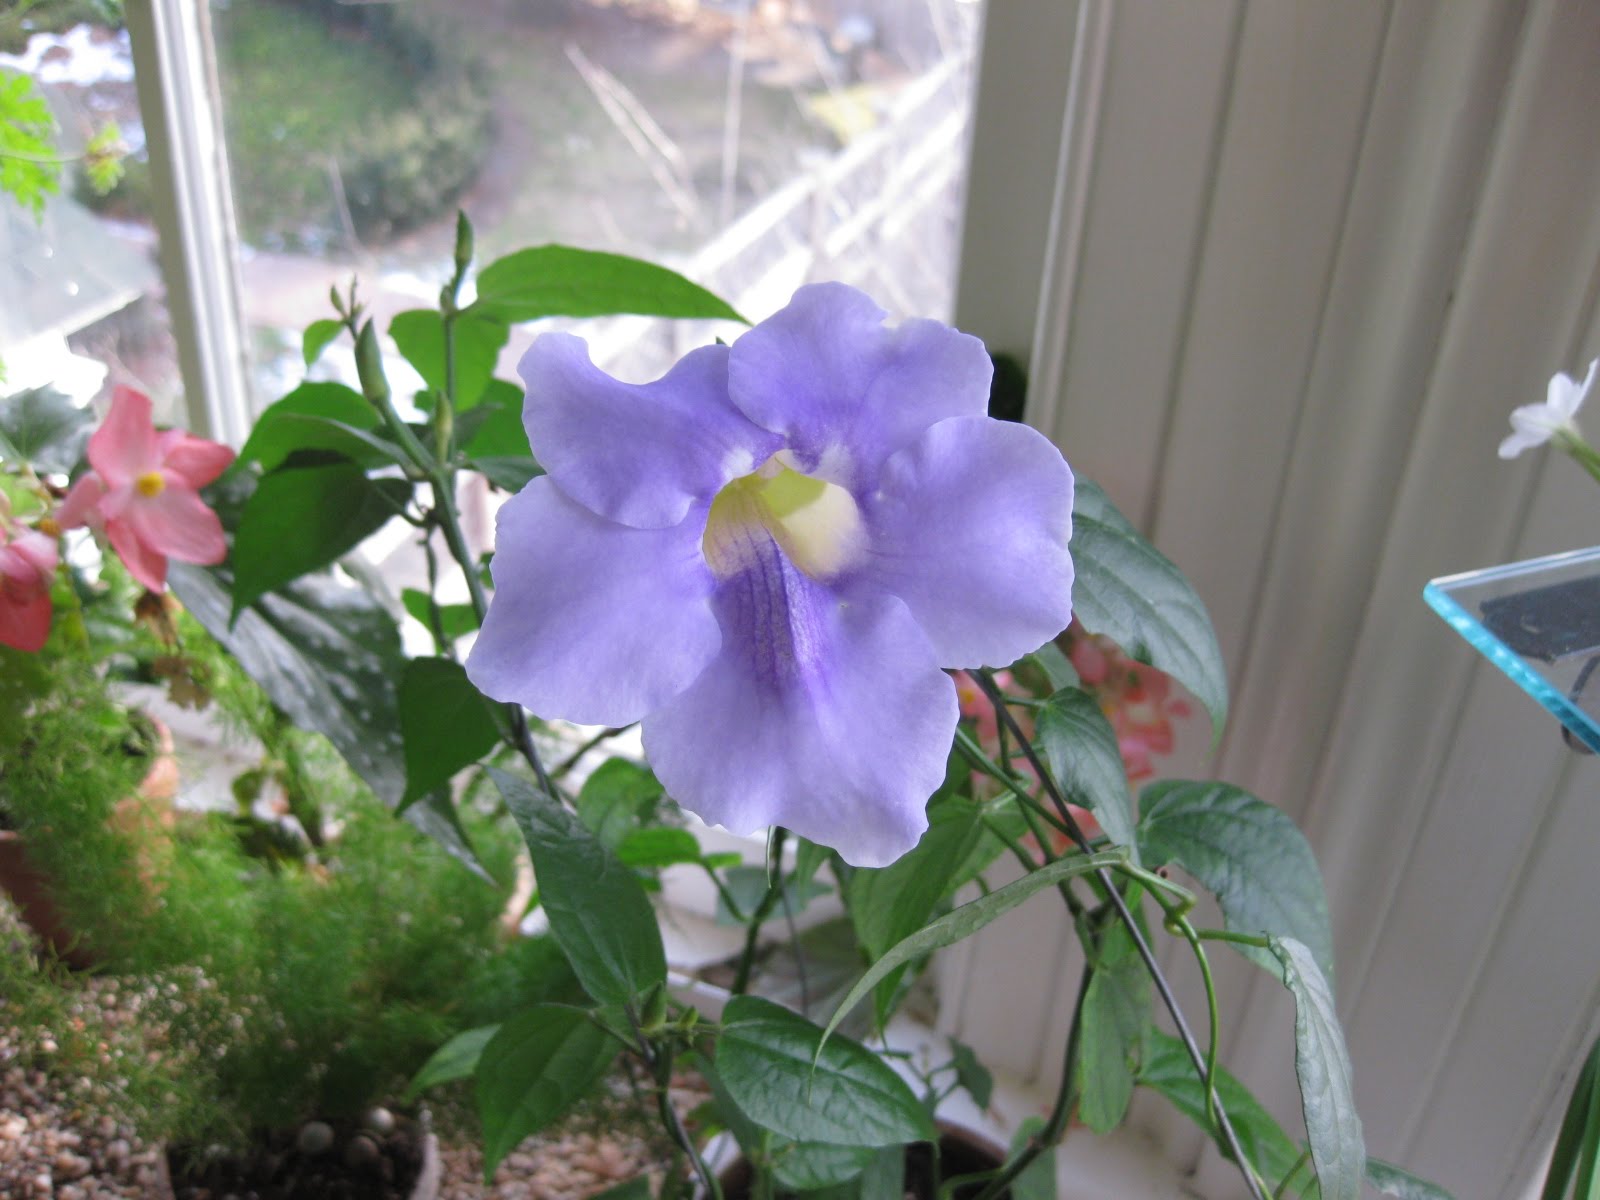 Thunbergia Grandiflora "Blue Sky Flower"